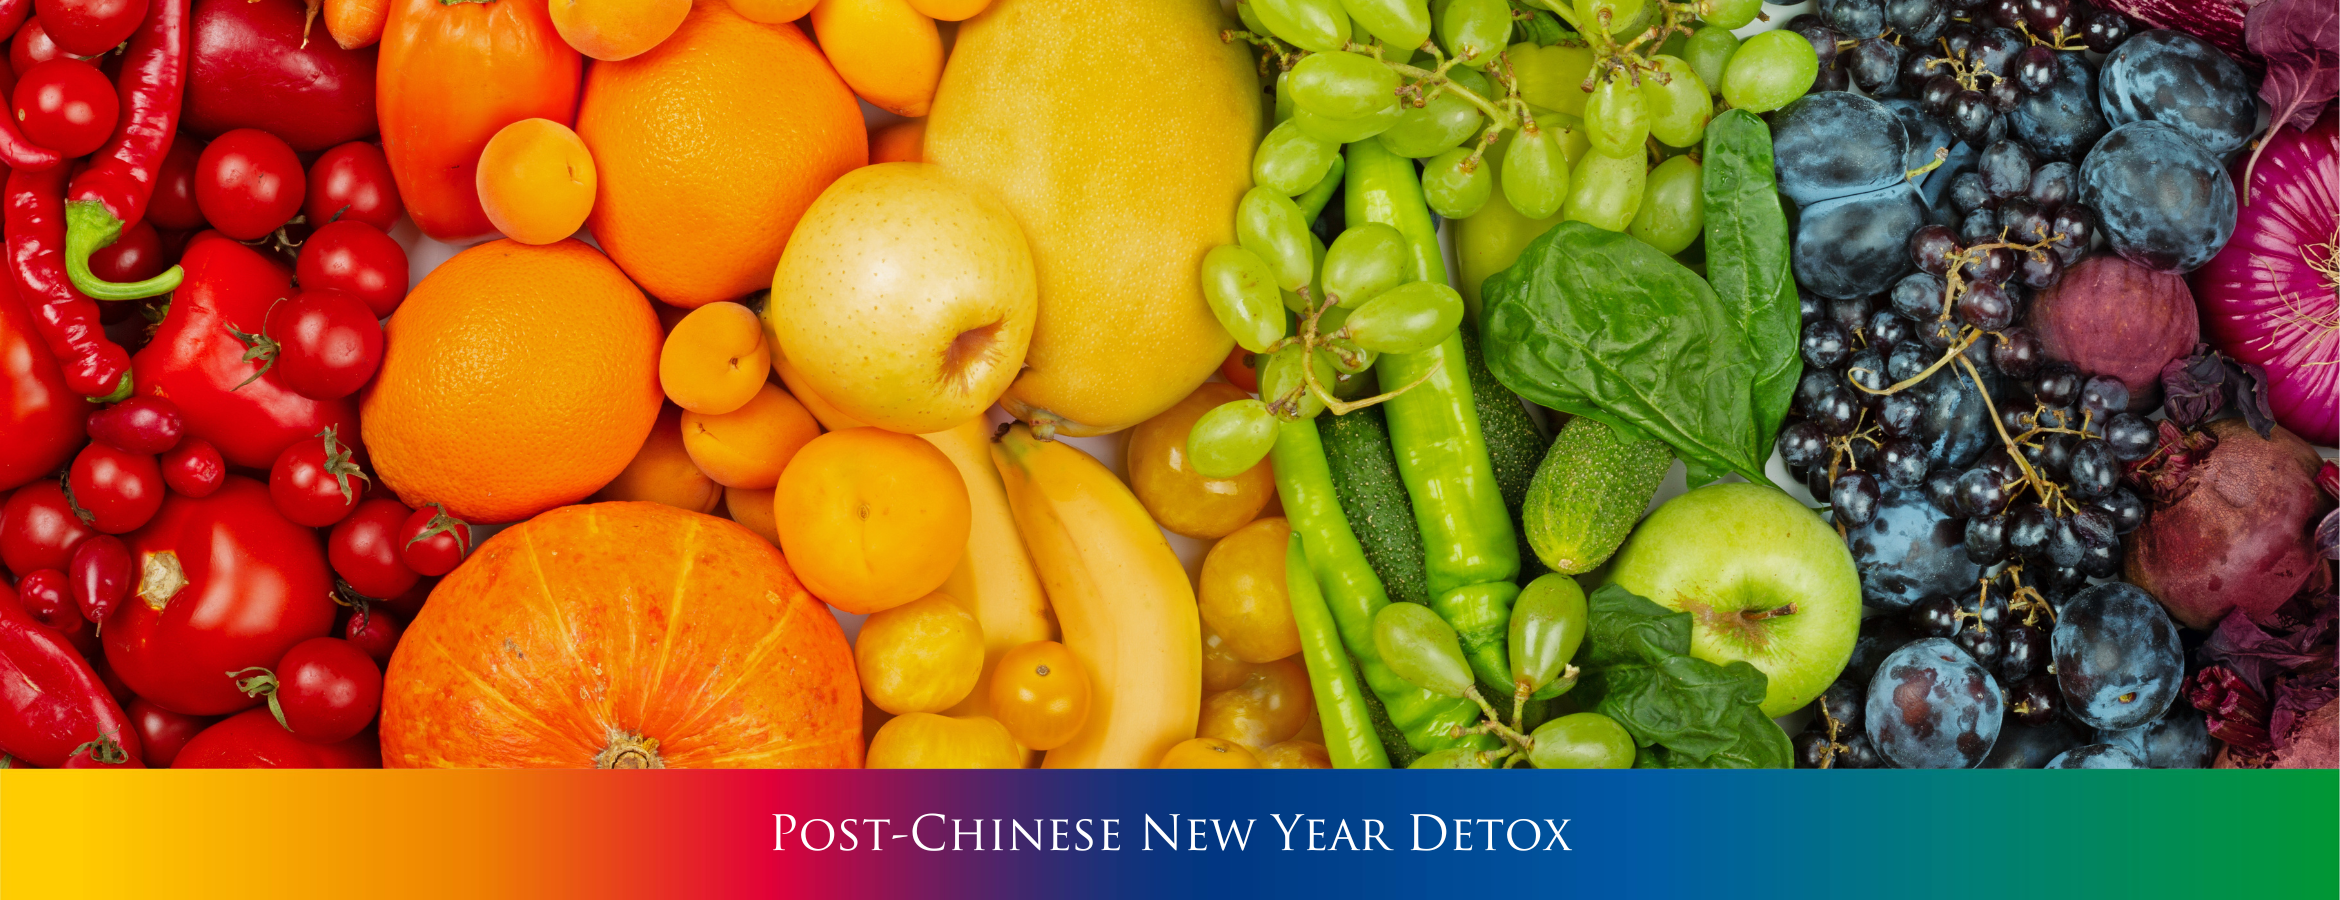 Post-Chinese New Year Detox